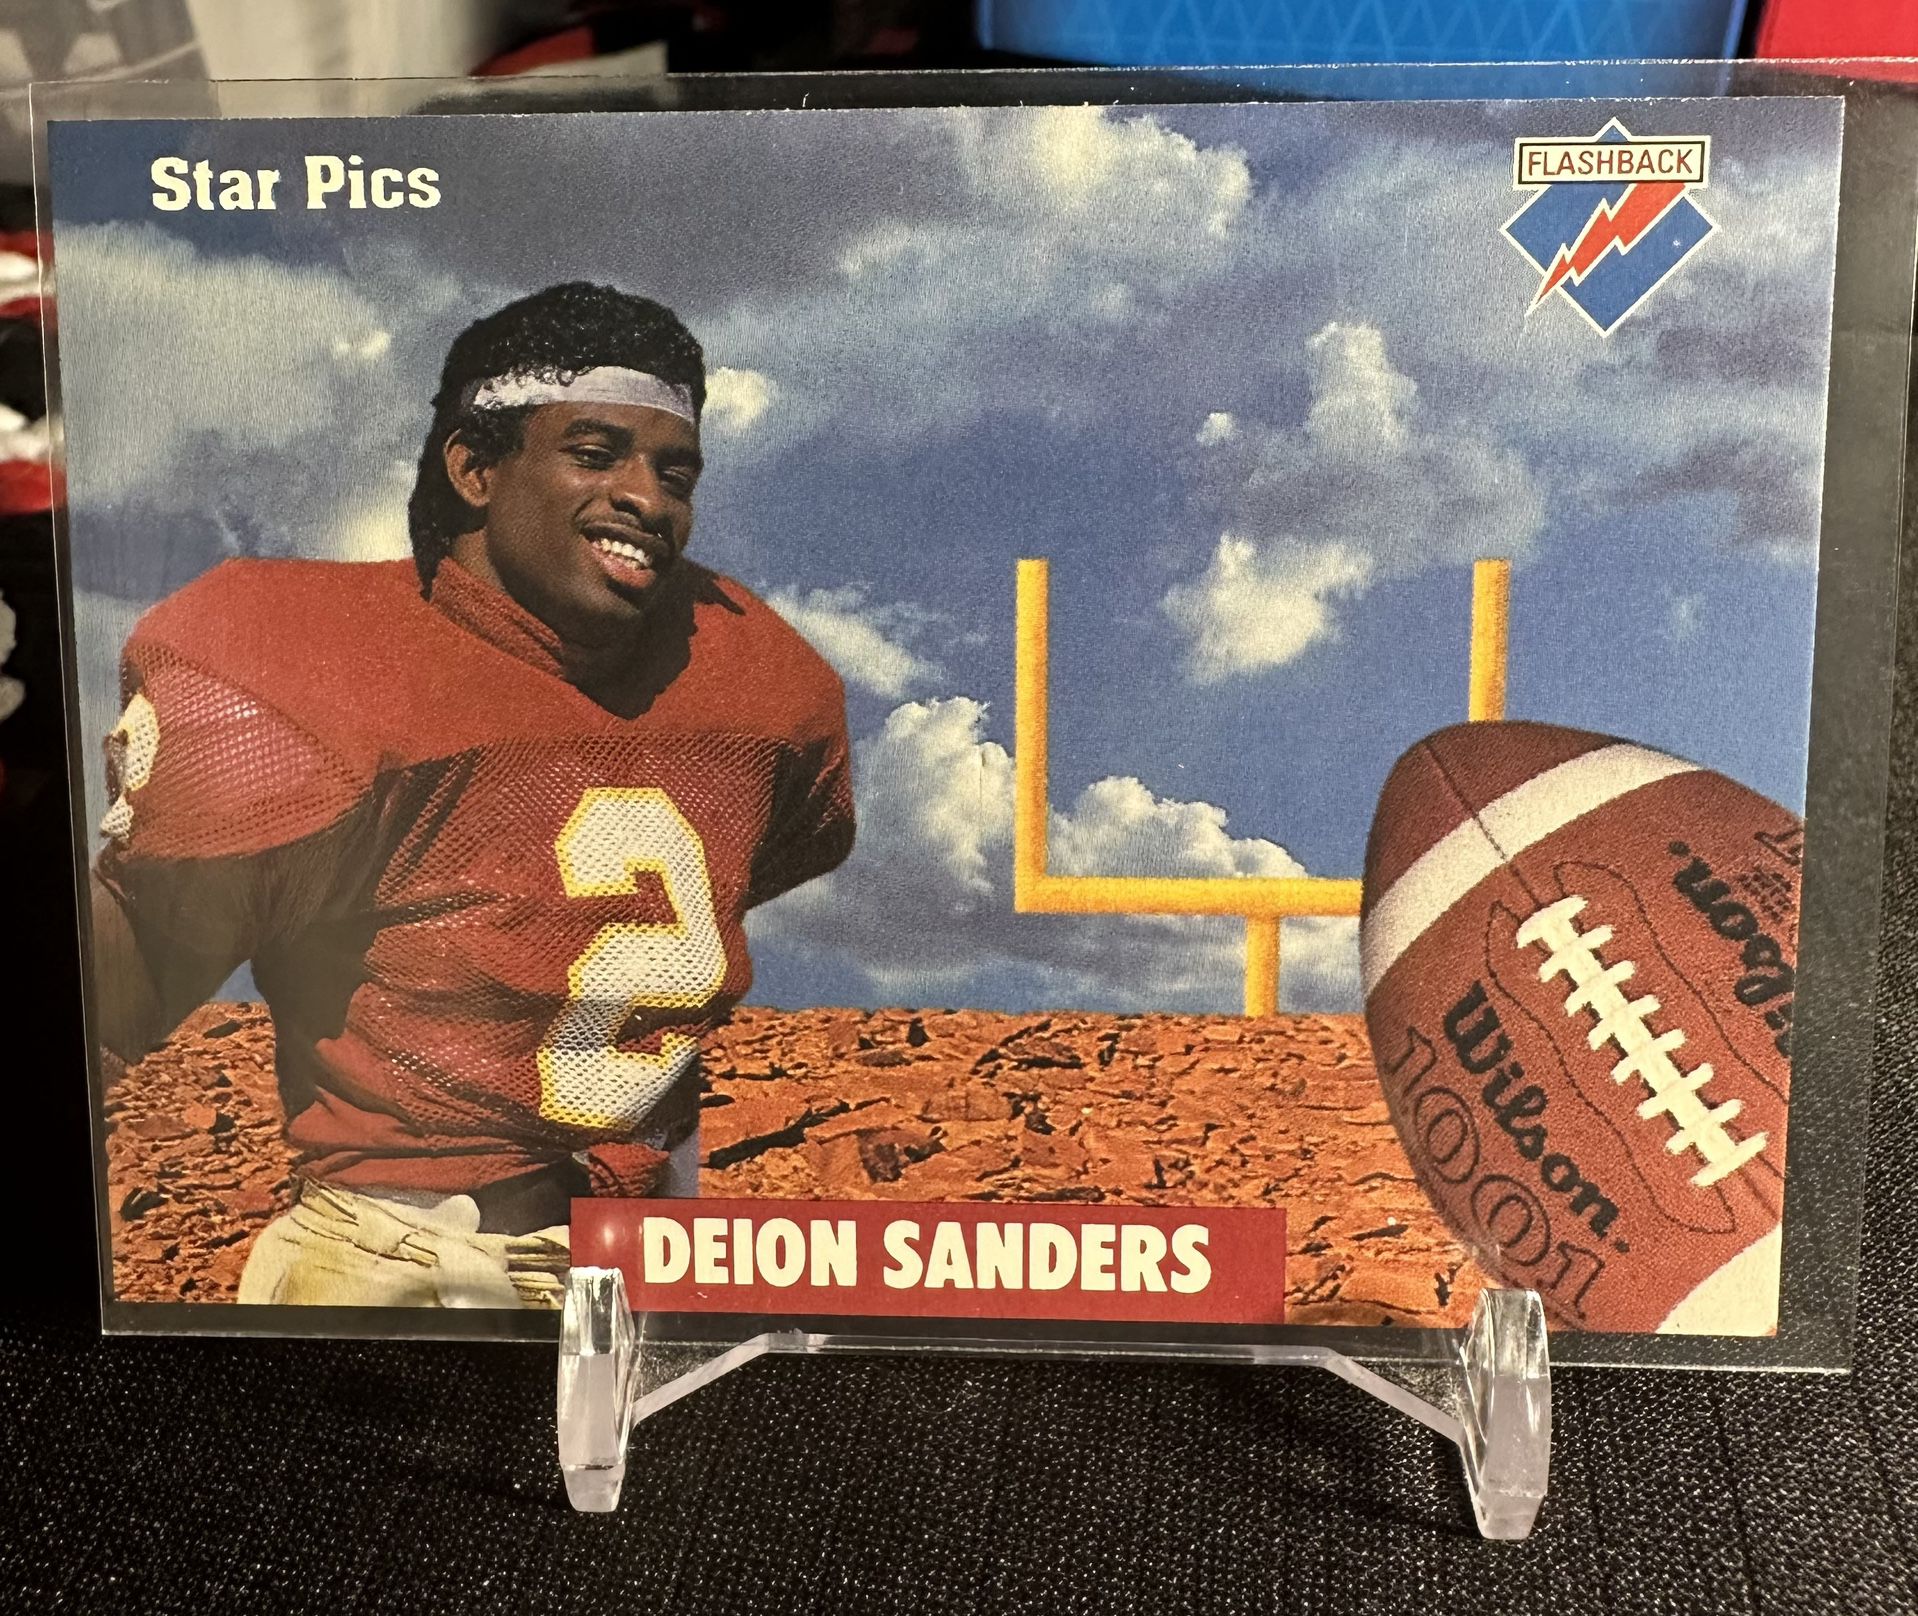 Deion Sanders 1991 Star Pics #80 for Sale in San Jose, CA - OfferUp